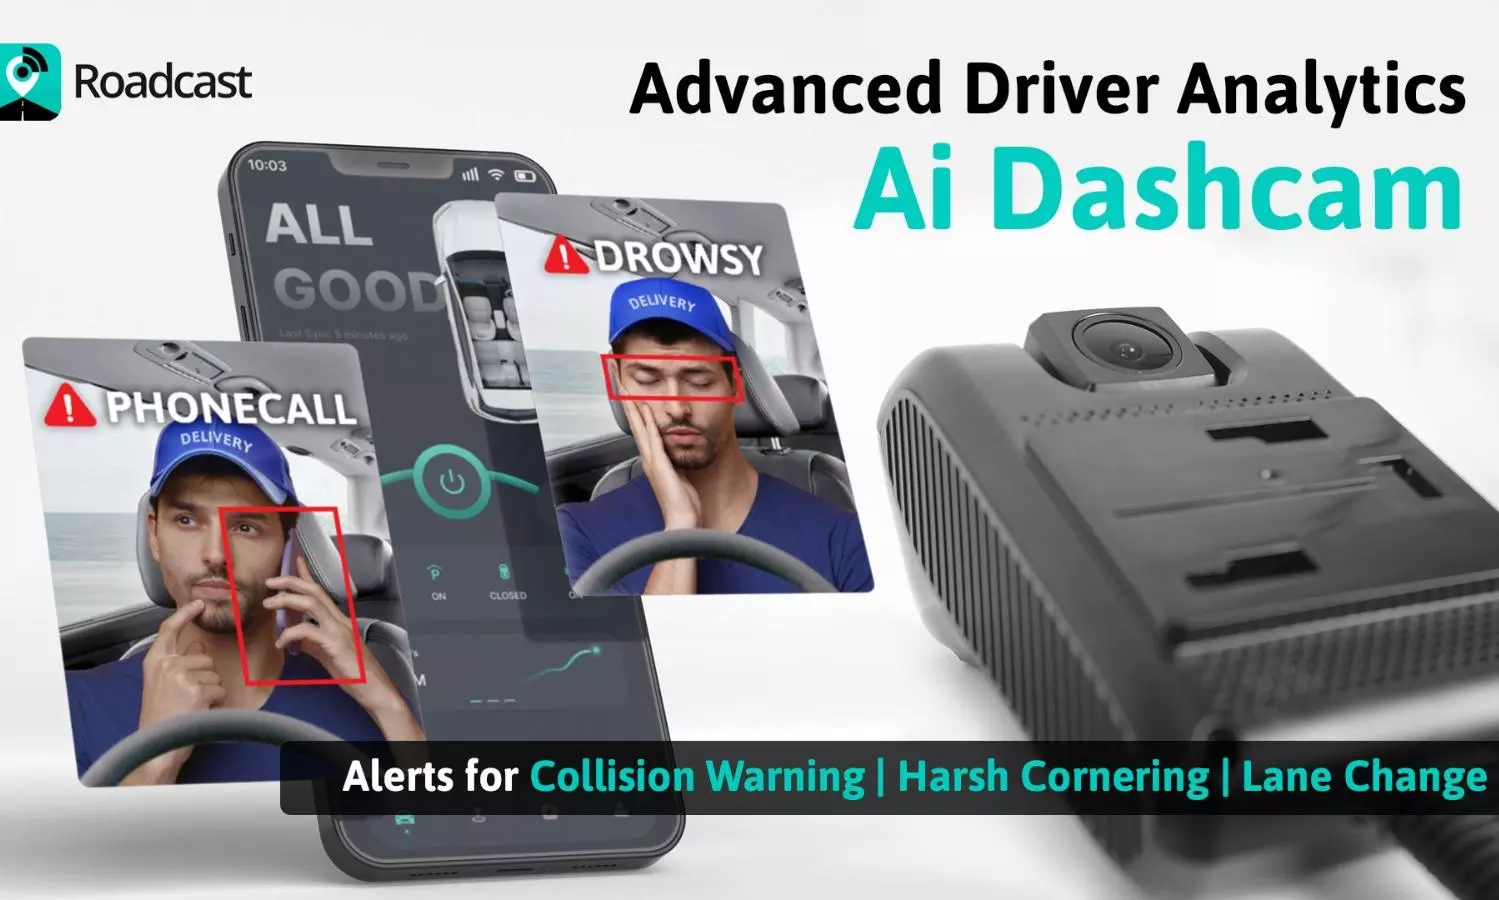 Roadcast introduces AI dashcam for logistics safety